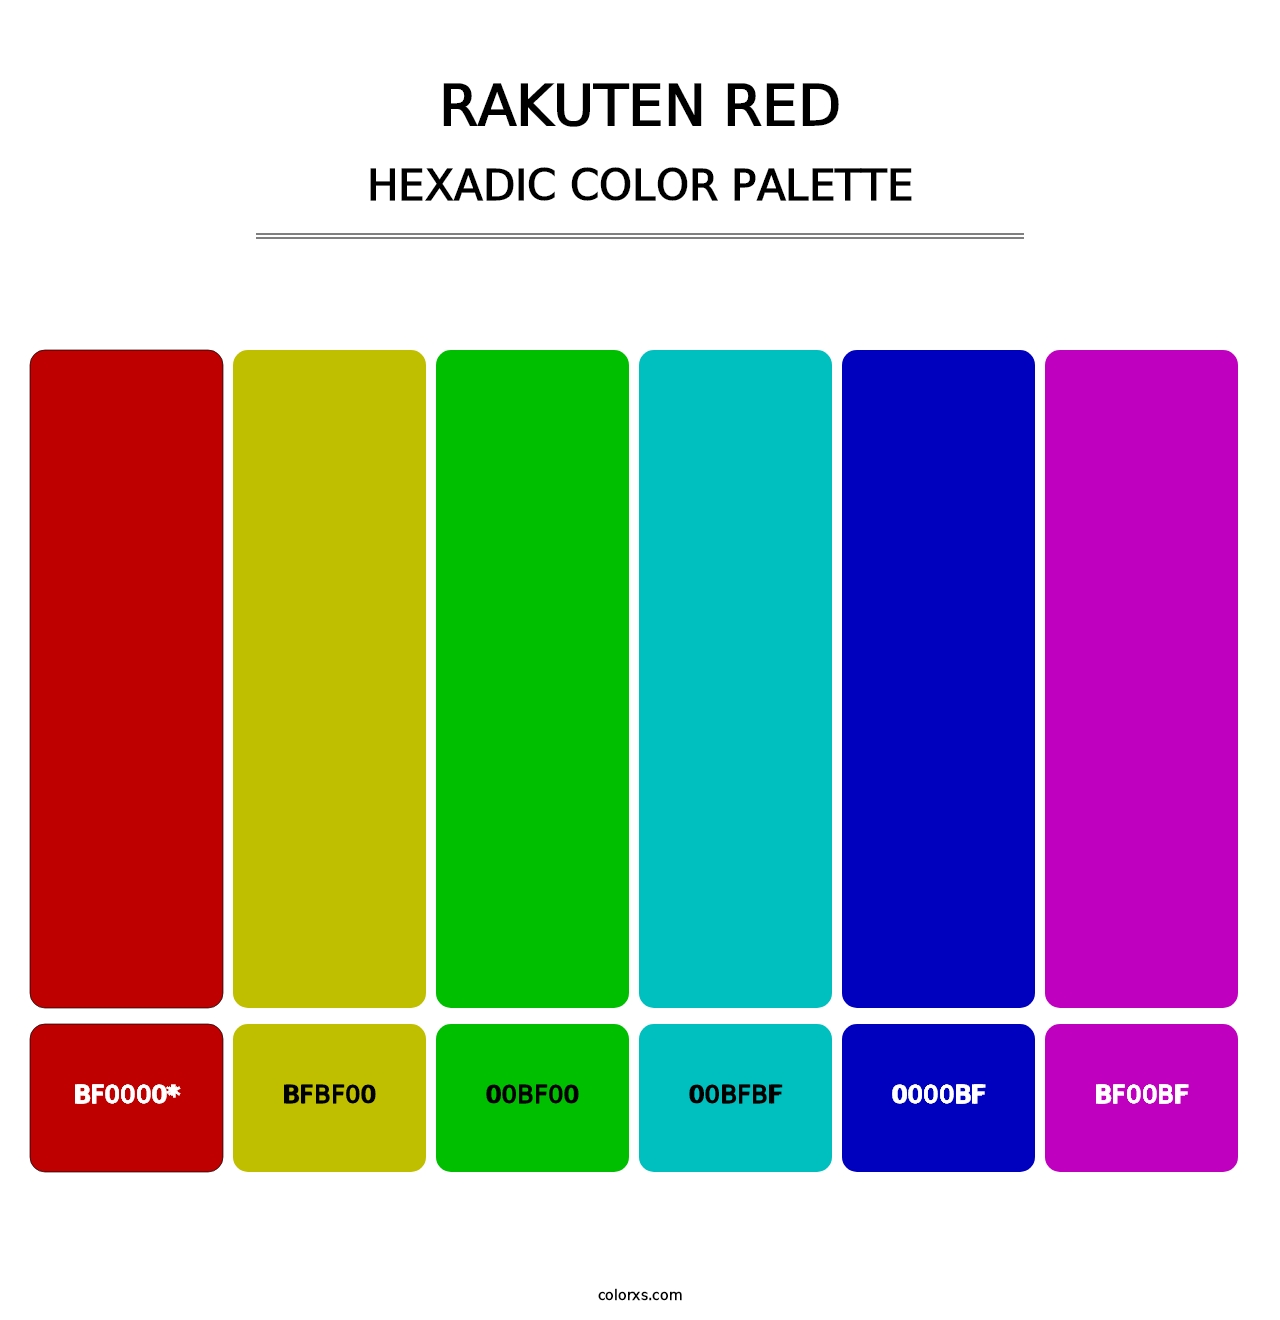 Rakuten Red - Hexadic Color Palette